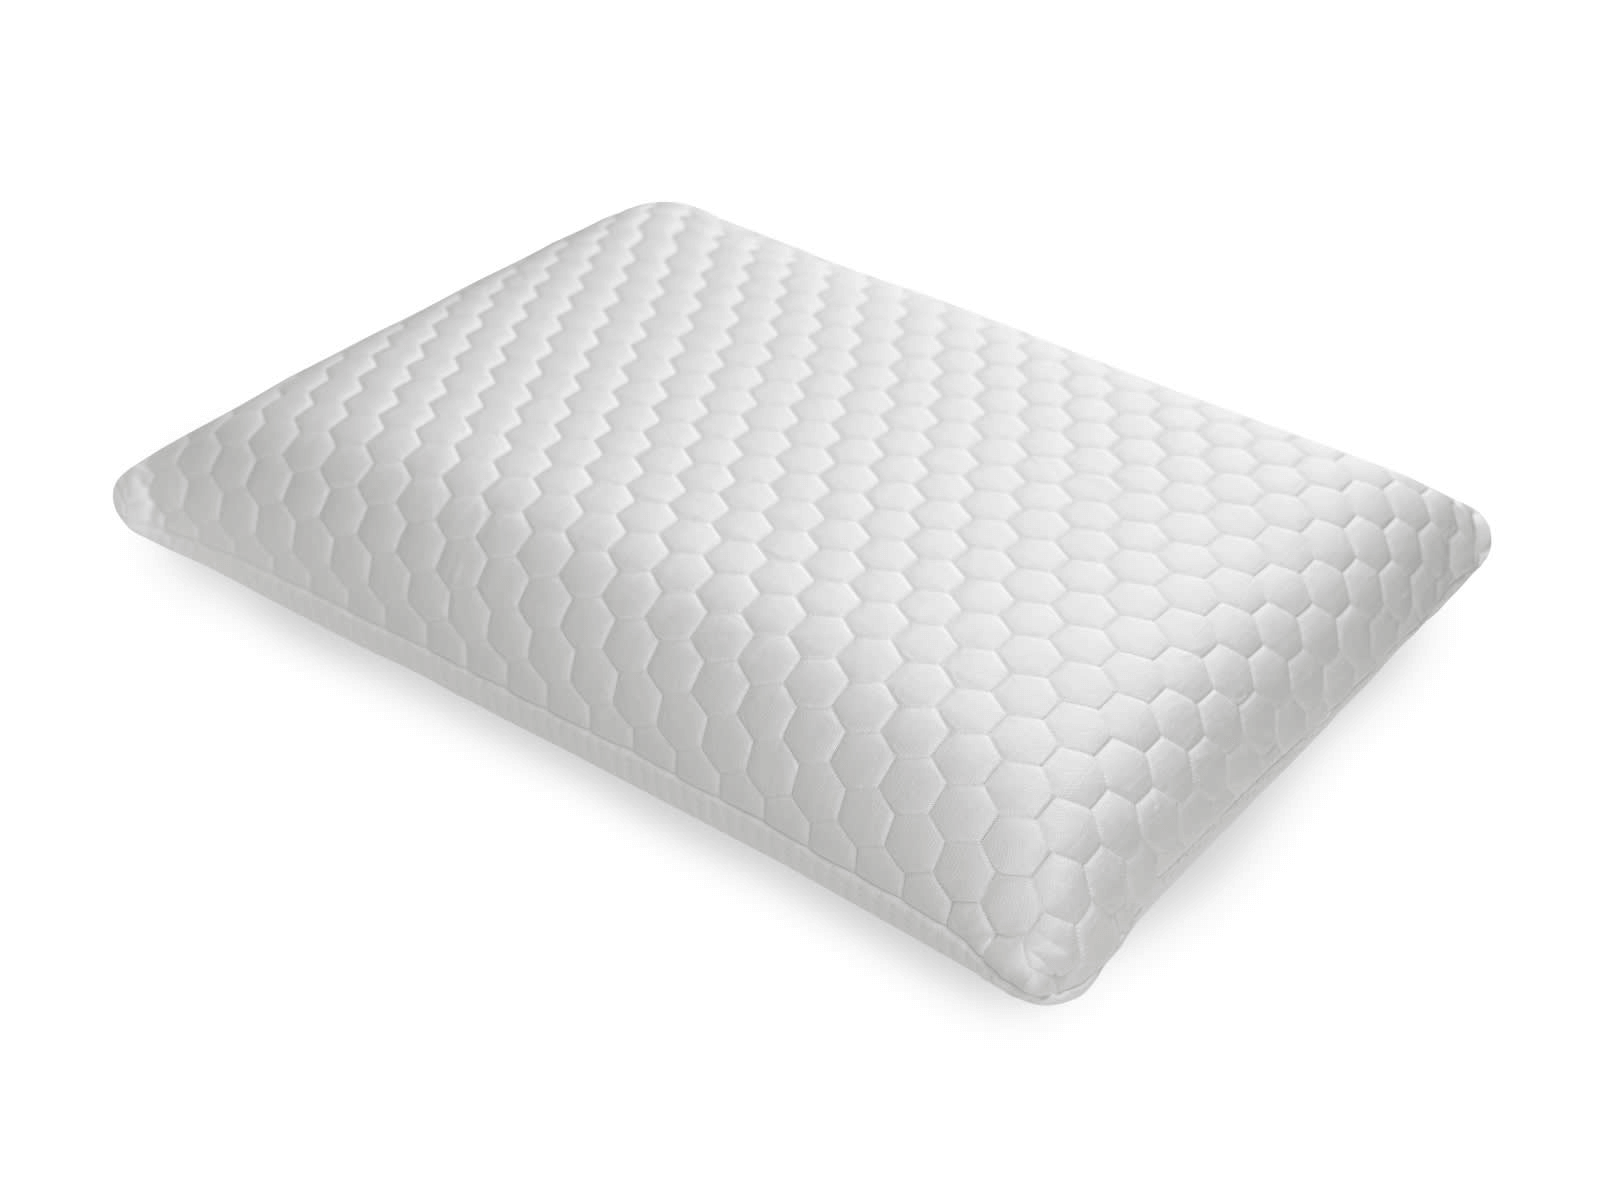 helix gel cooling pillow